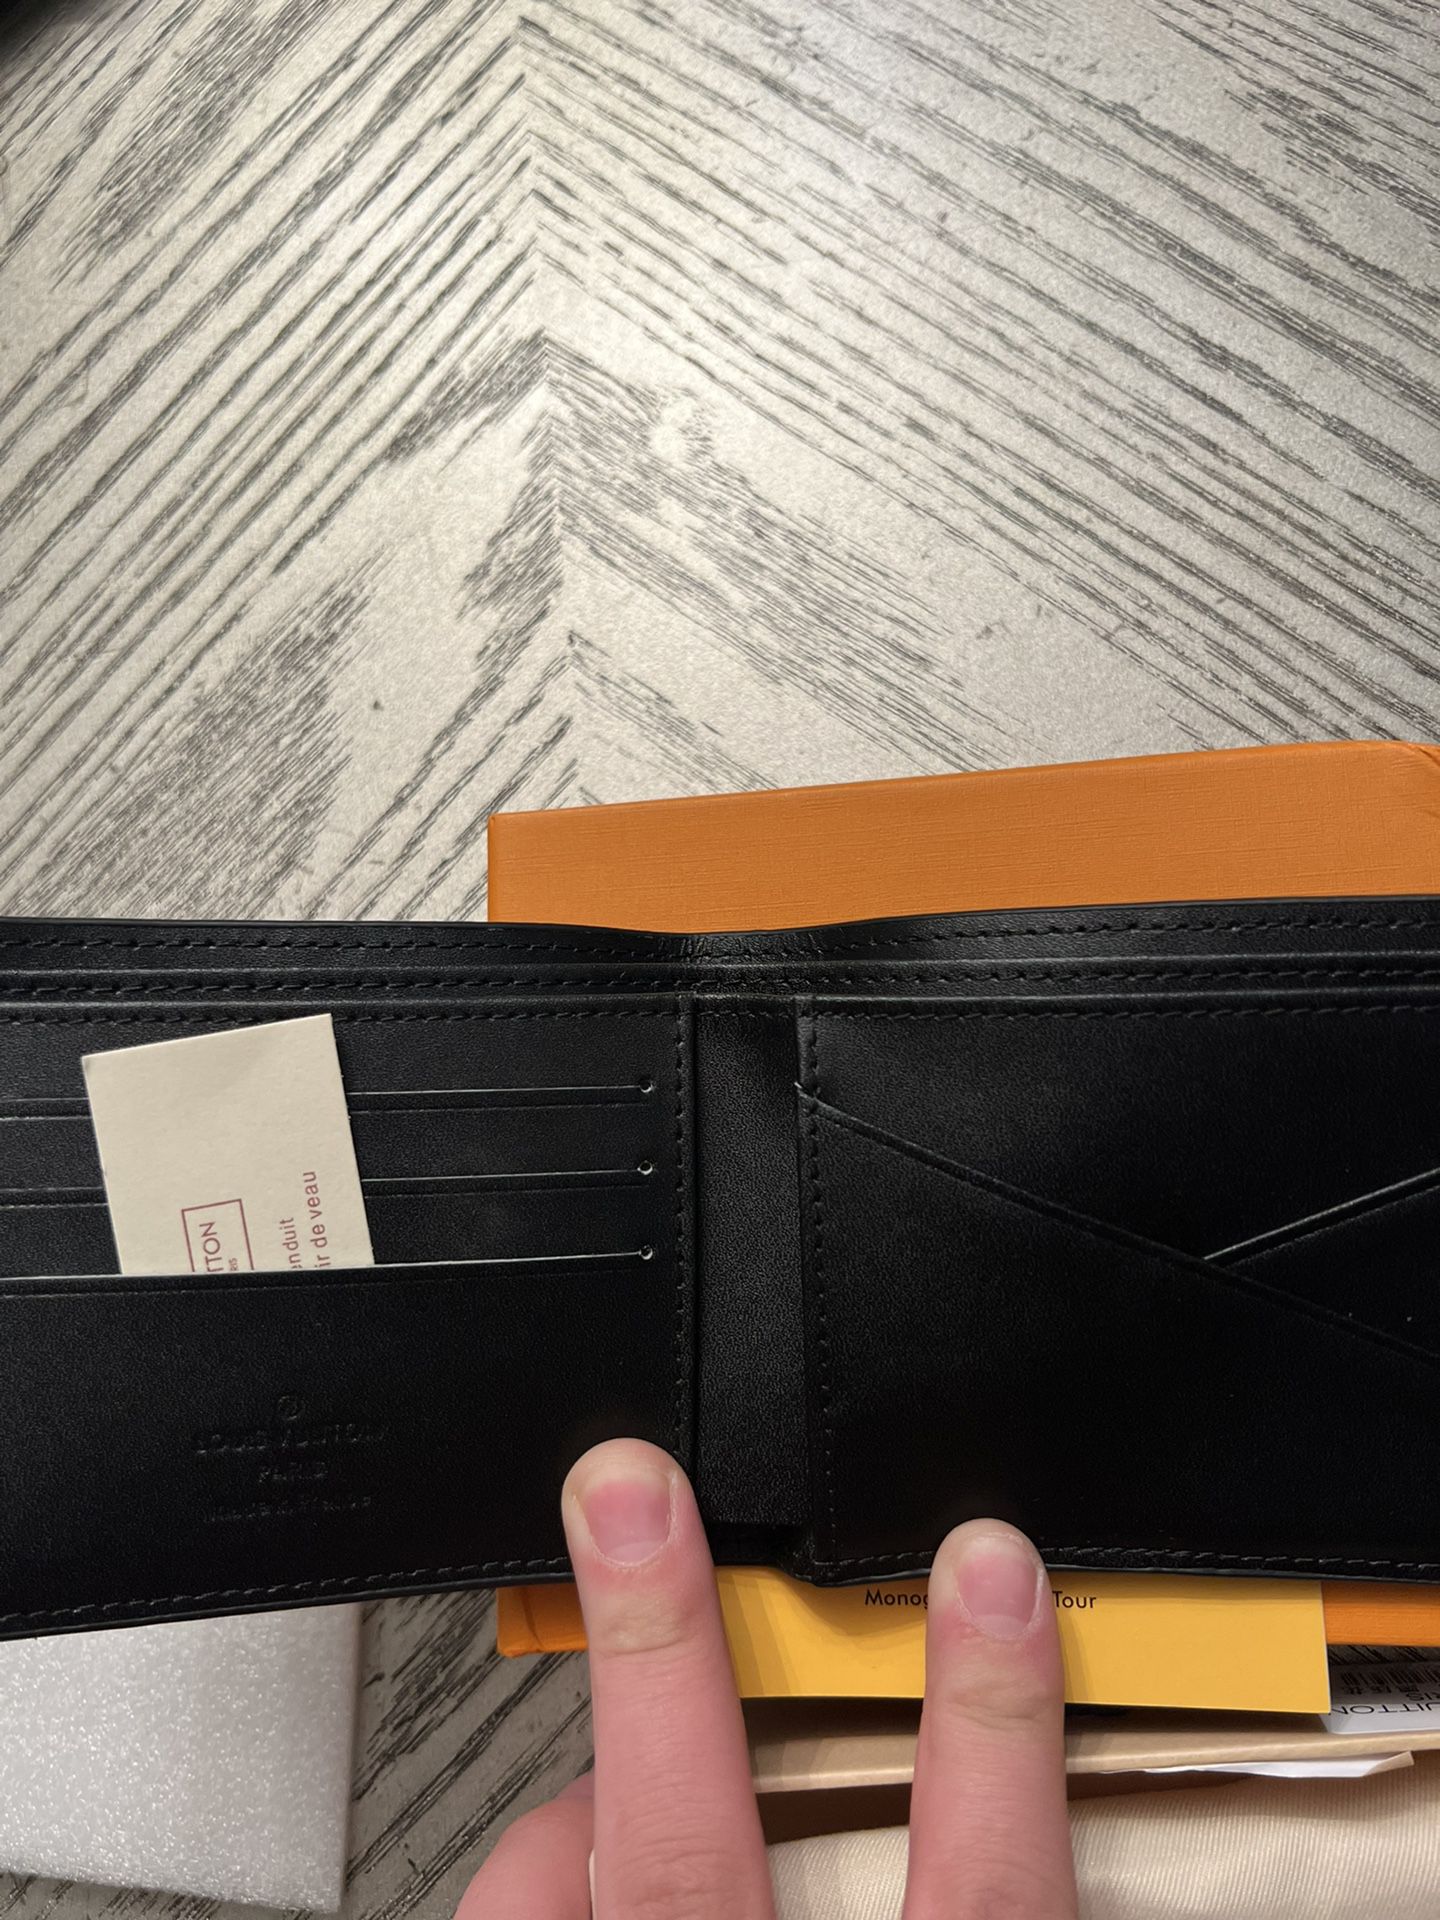 Louis Vuitton Slender Wallet Monogram Eclipse Reverse for Sale in Lombard,  IL - OfferUp